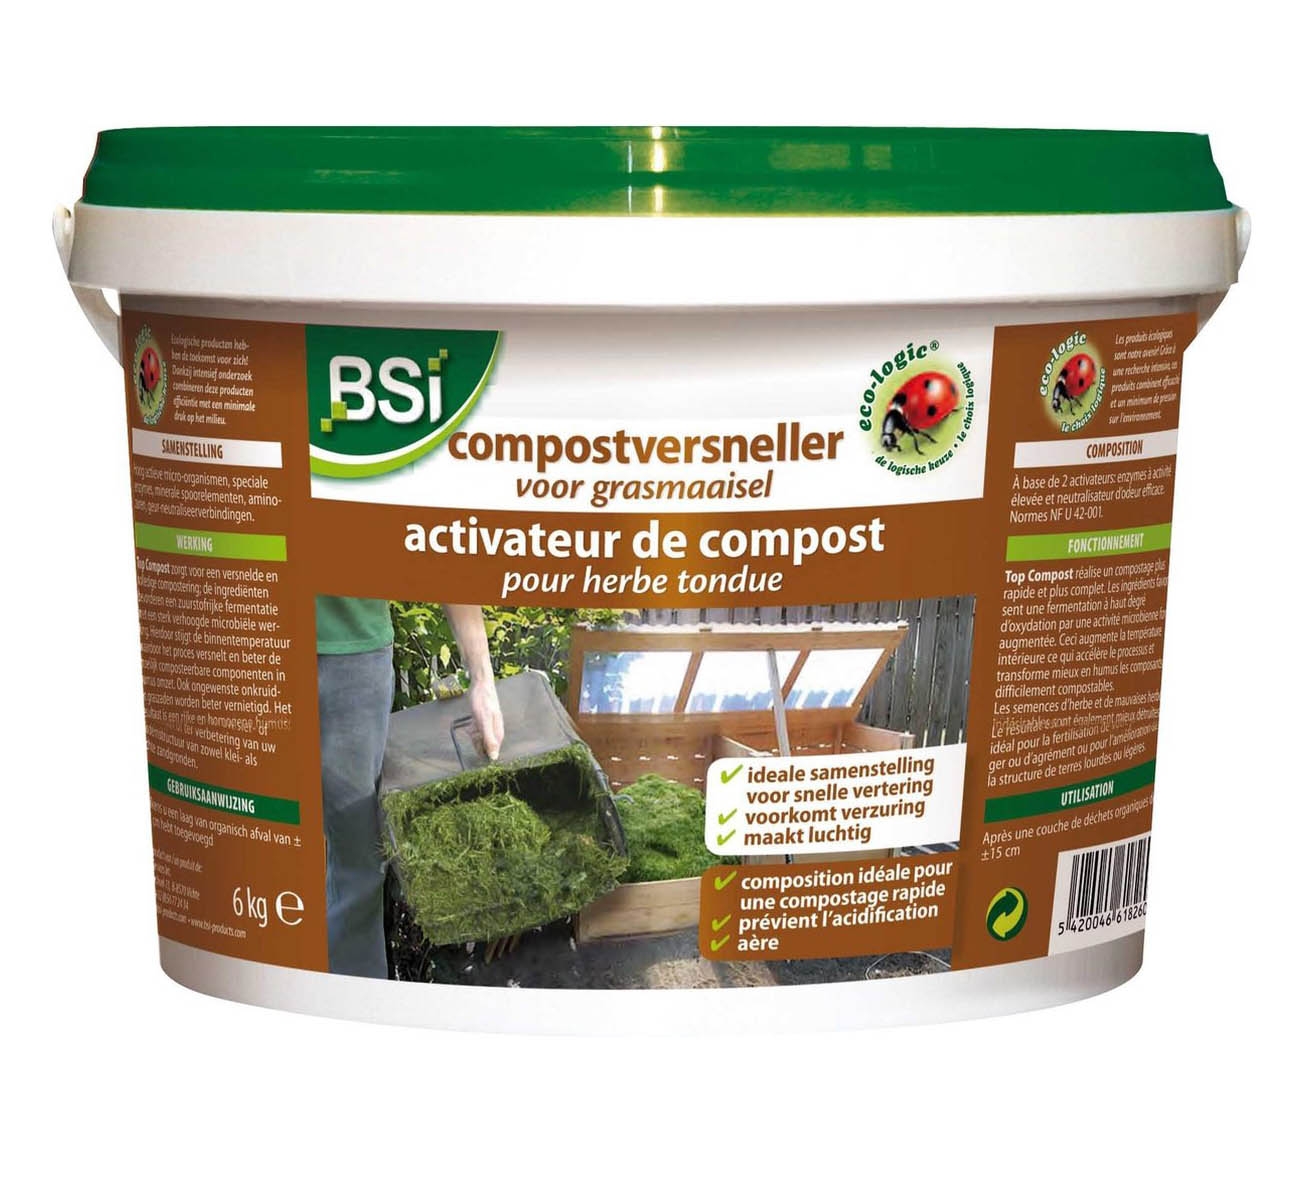 Gras composteren met compostversneller 6 kg